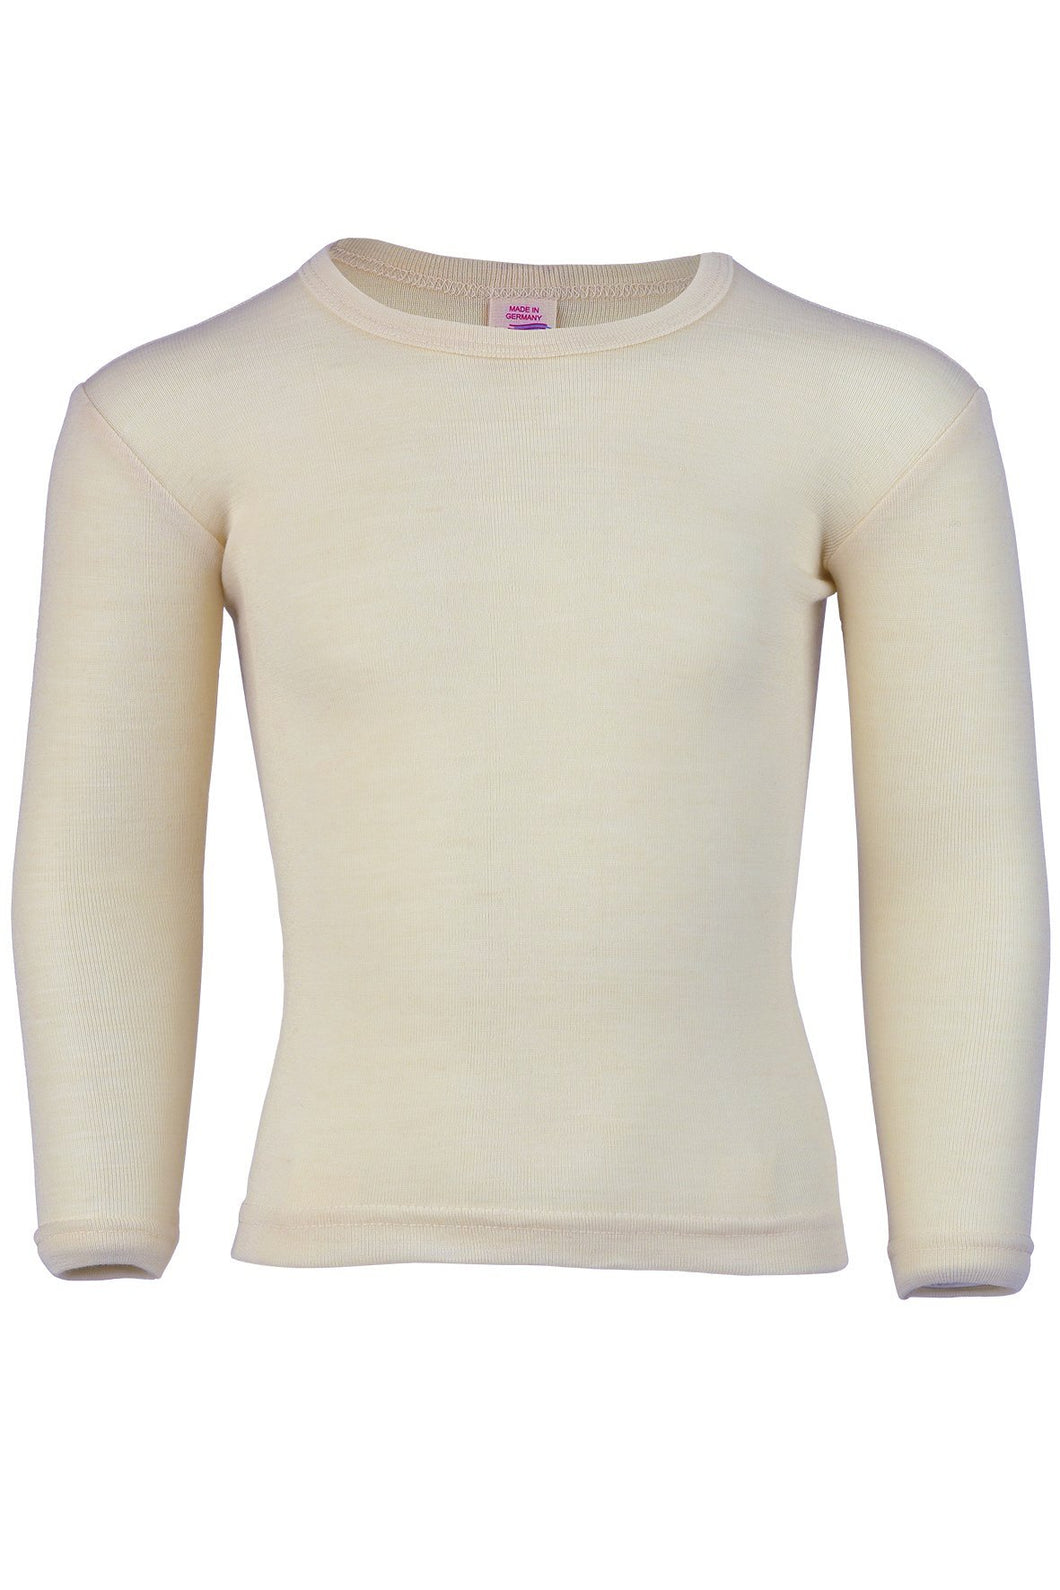 Engel Organic Wool Child's Long Sleeve Shirt